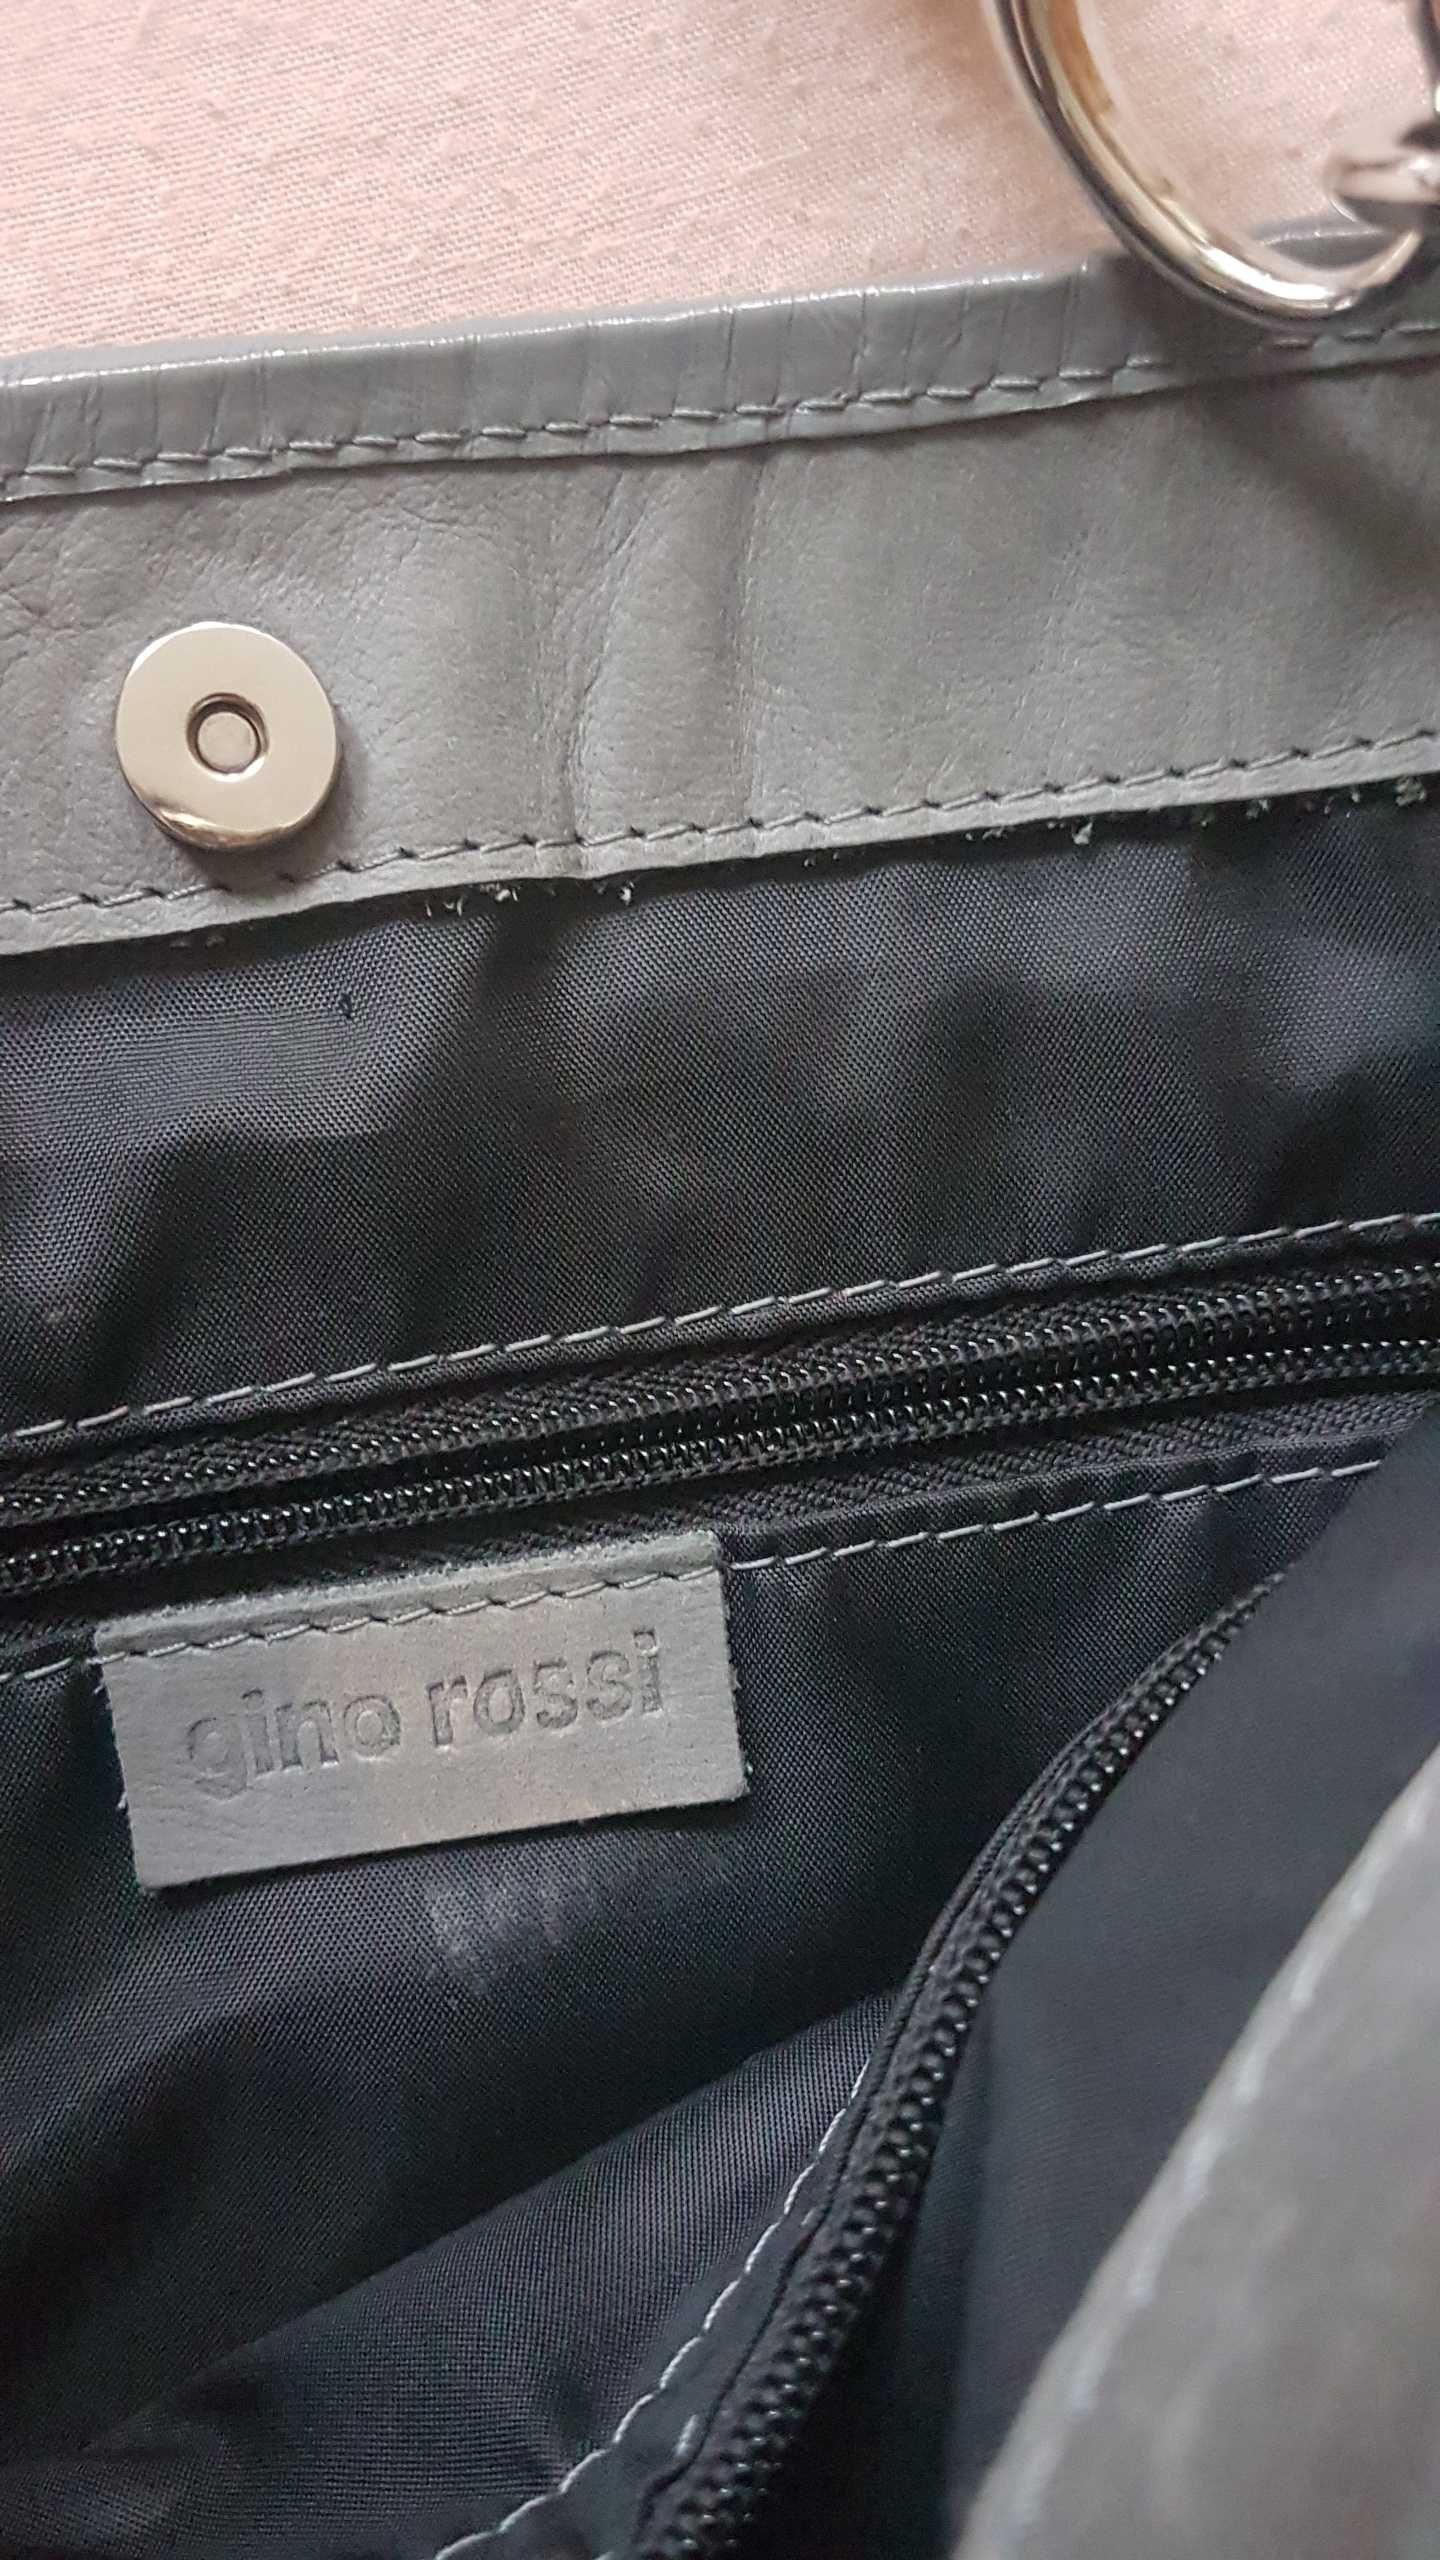 Ginno Rossi torba duża skóra naturalna bardzo fajna